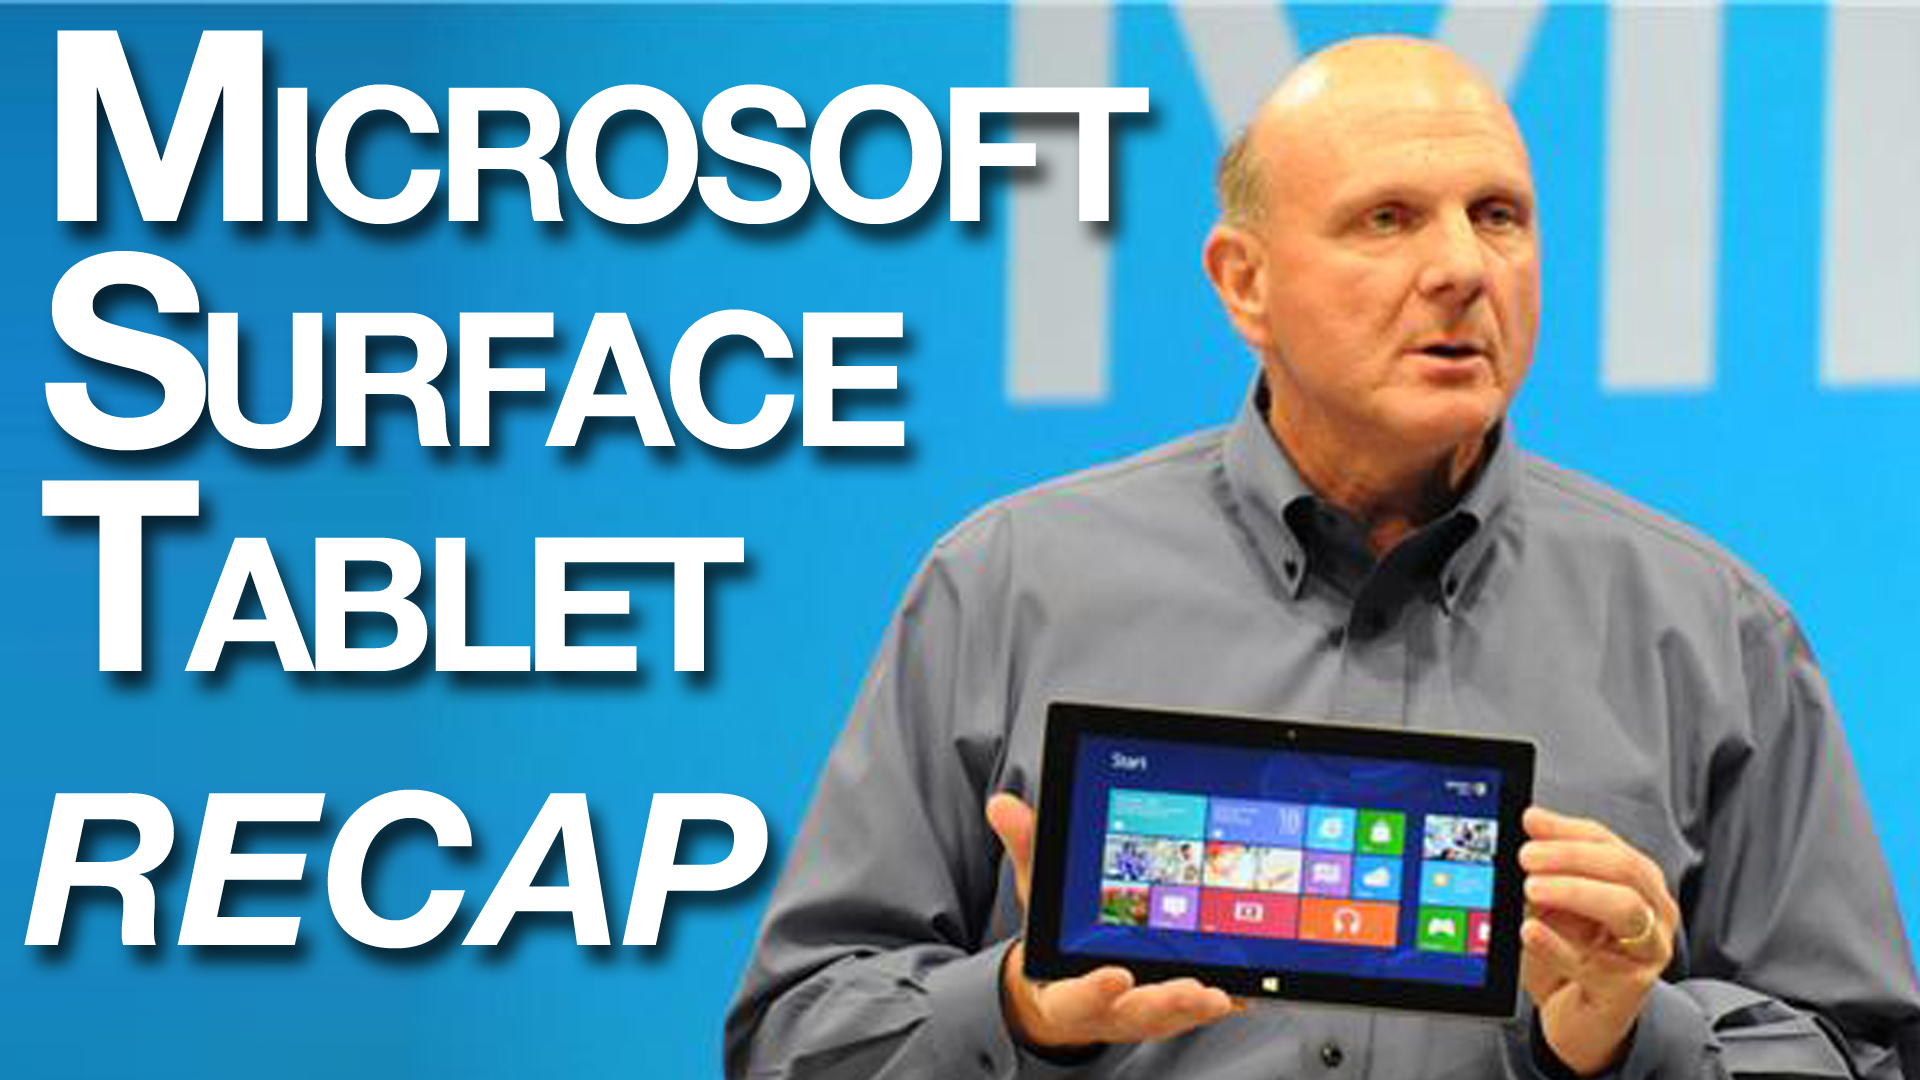 Microsoft Windows 8 Surface Tablet Event Recap